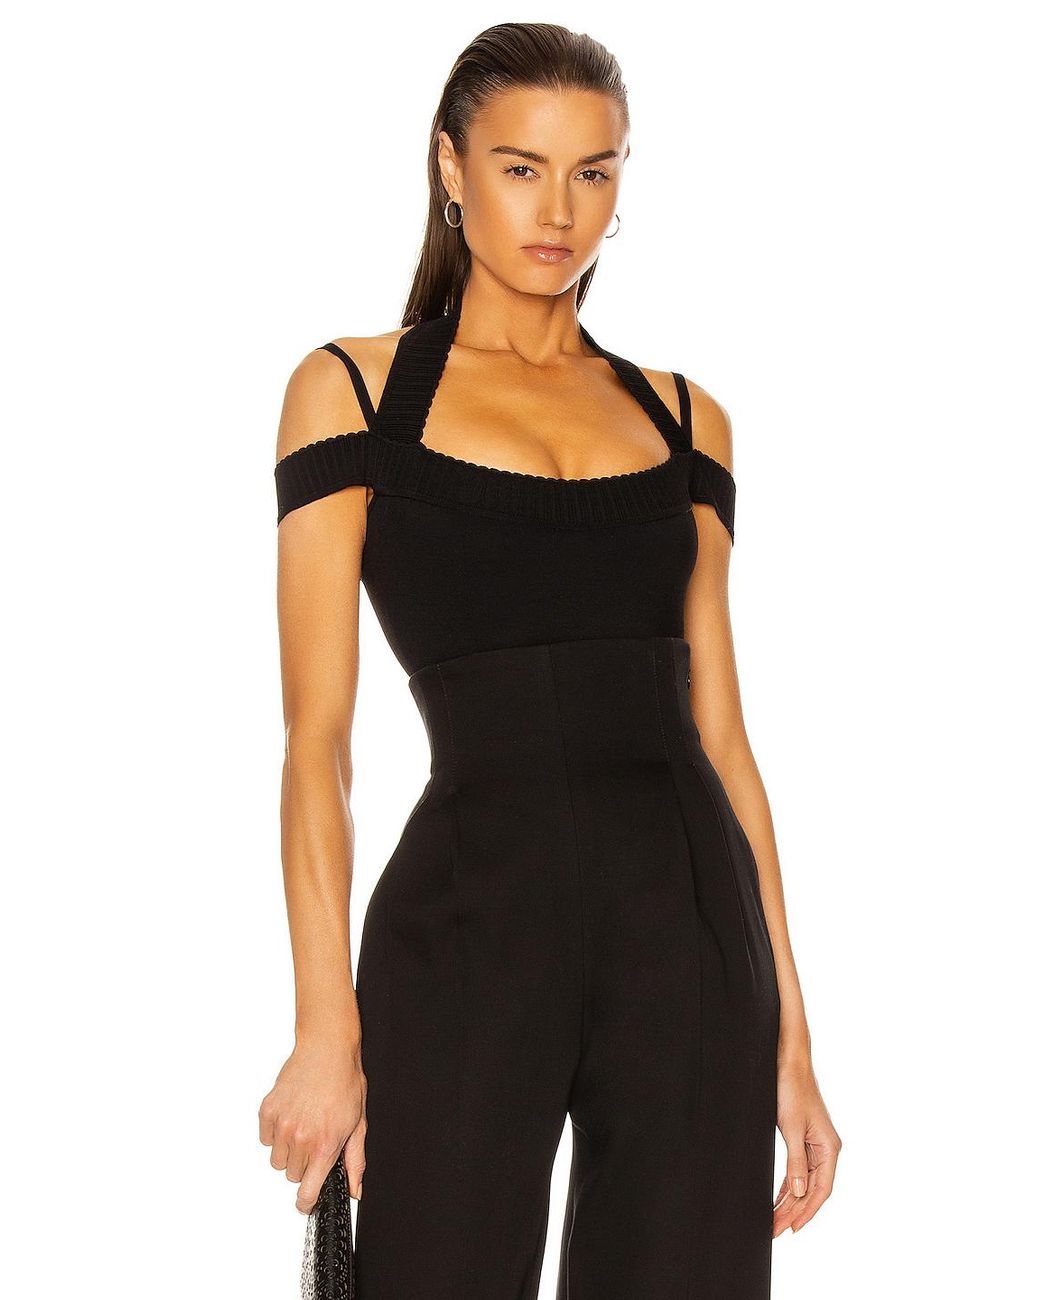 Alaïa Synthetic Cutout Bodysuit in Black - Lyst